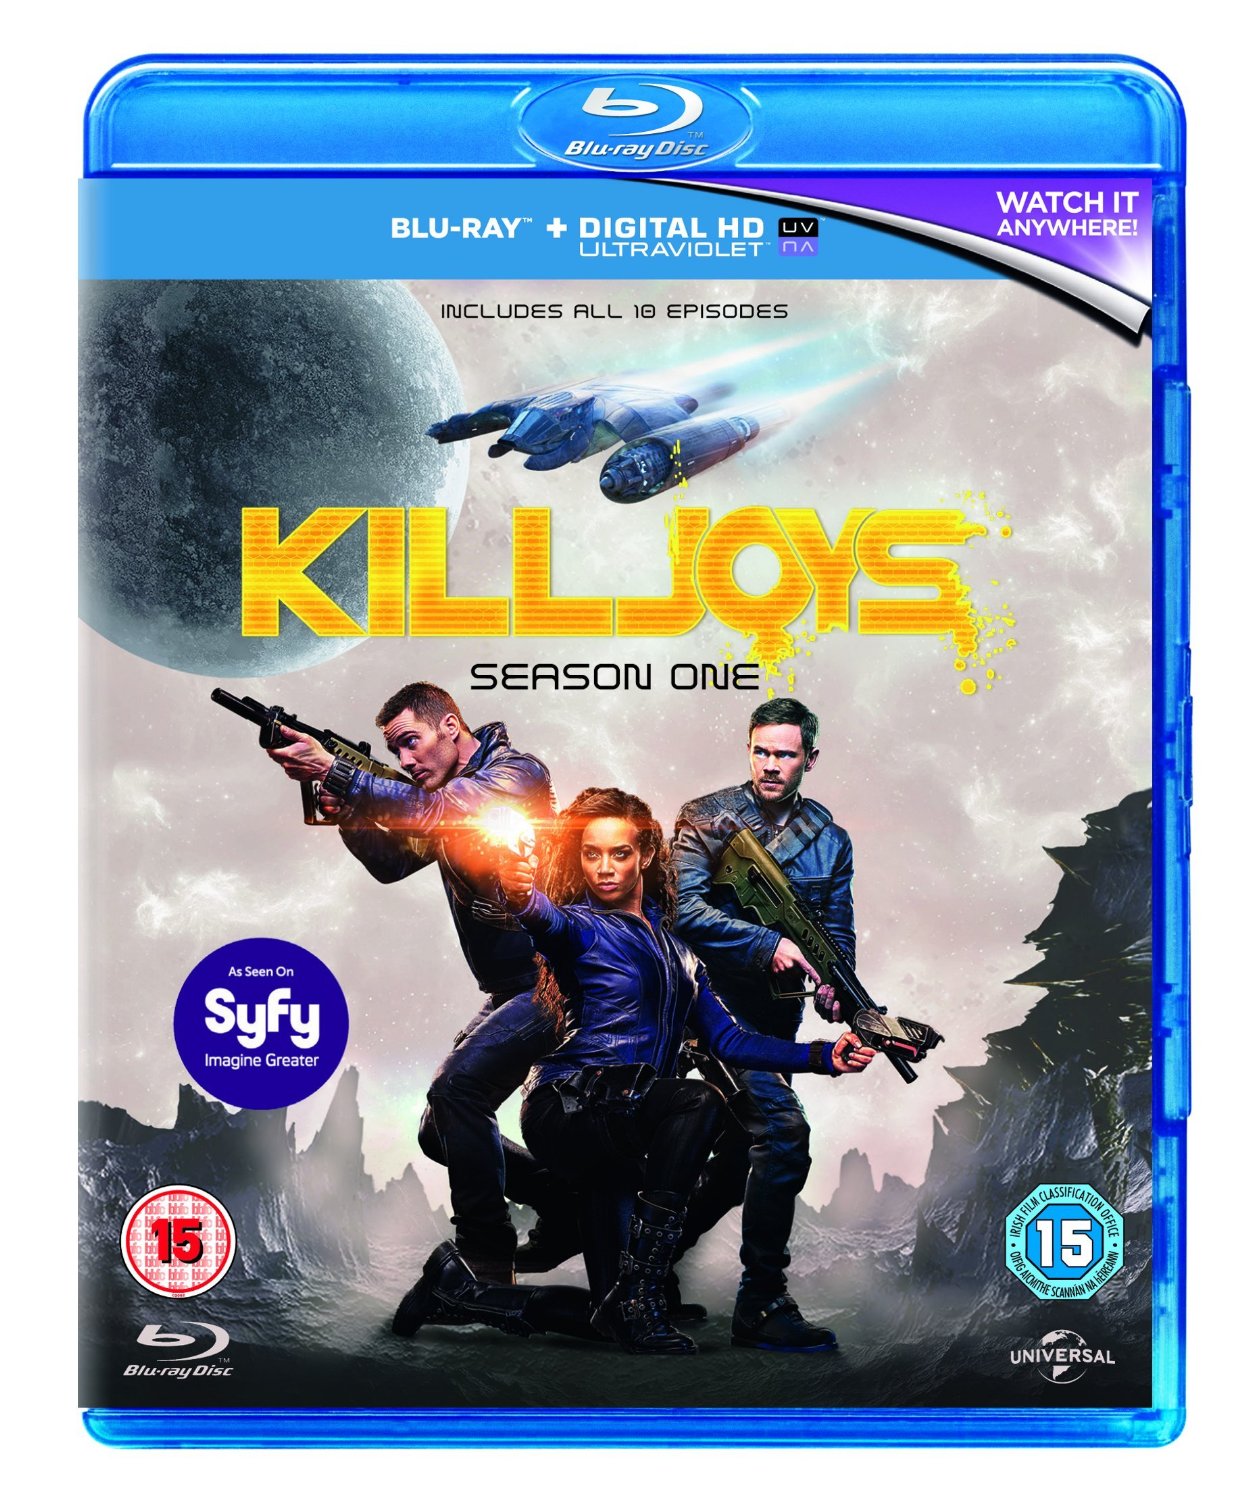 Killjoys Season 1 Blu-ray review